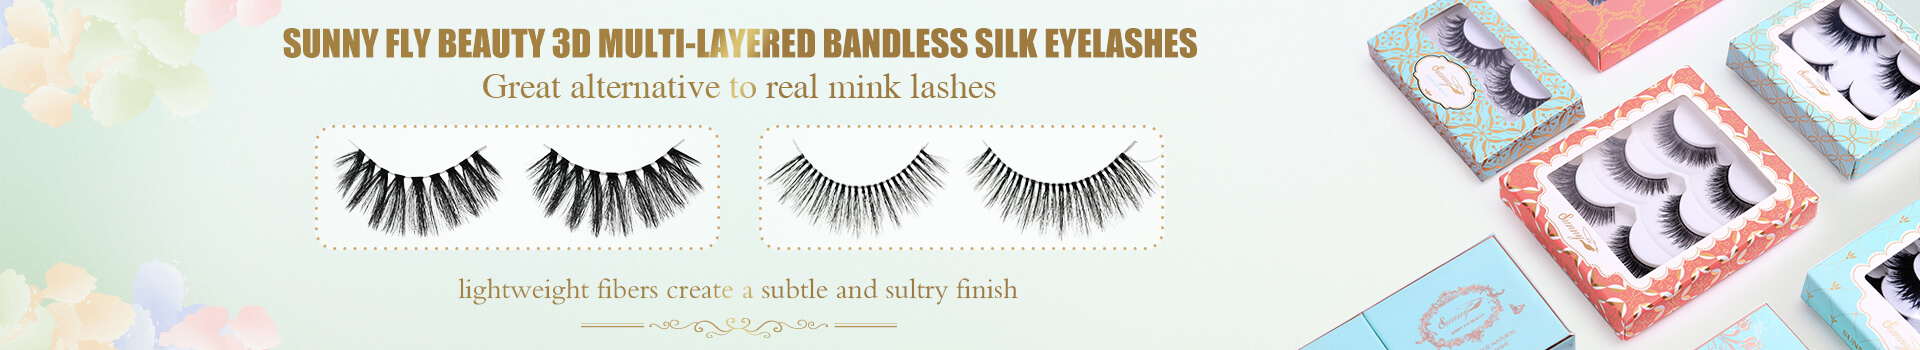 3D Multi-Layered Bandless Silk Eyelas TA11